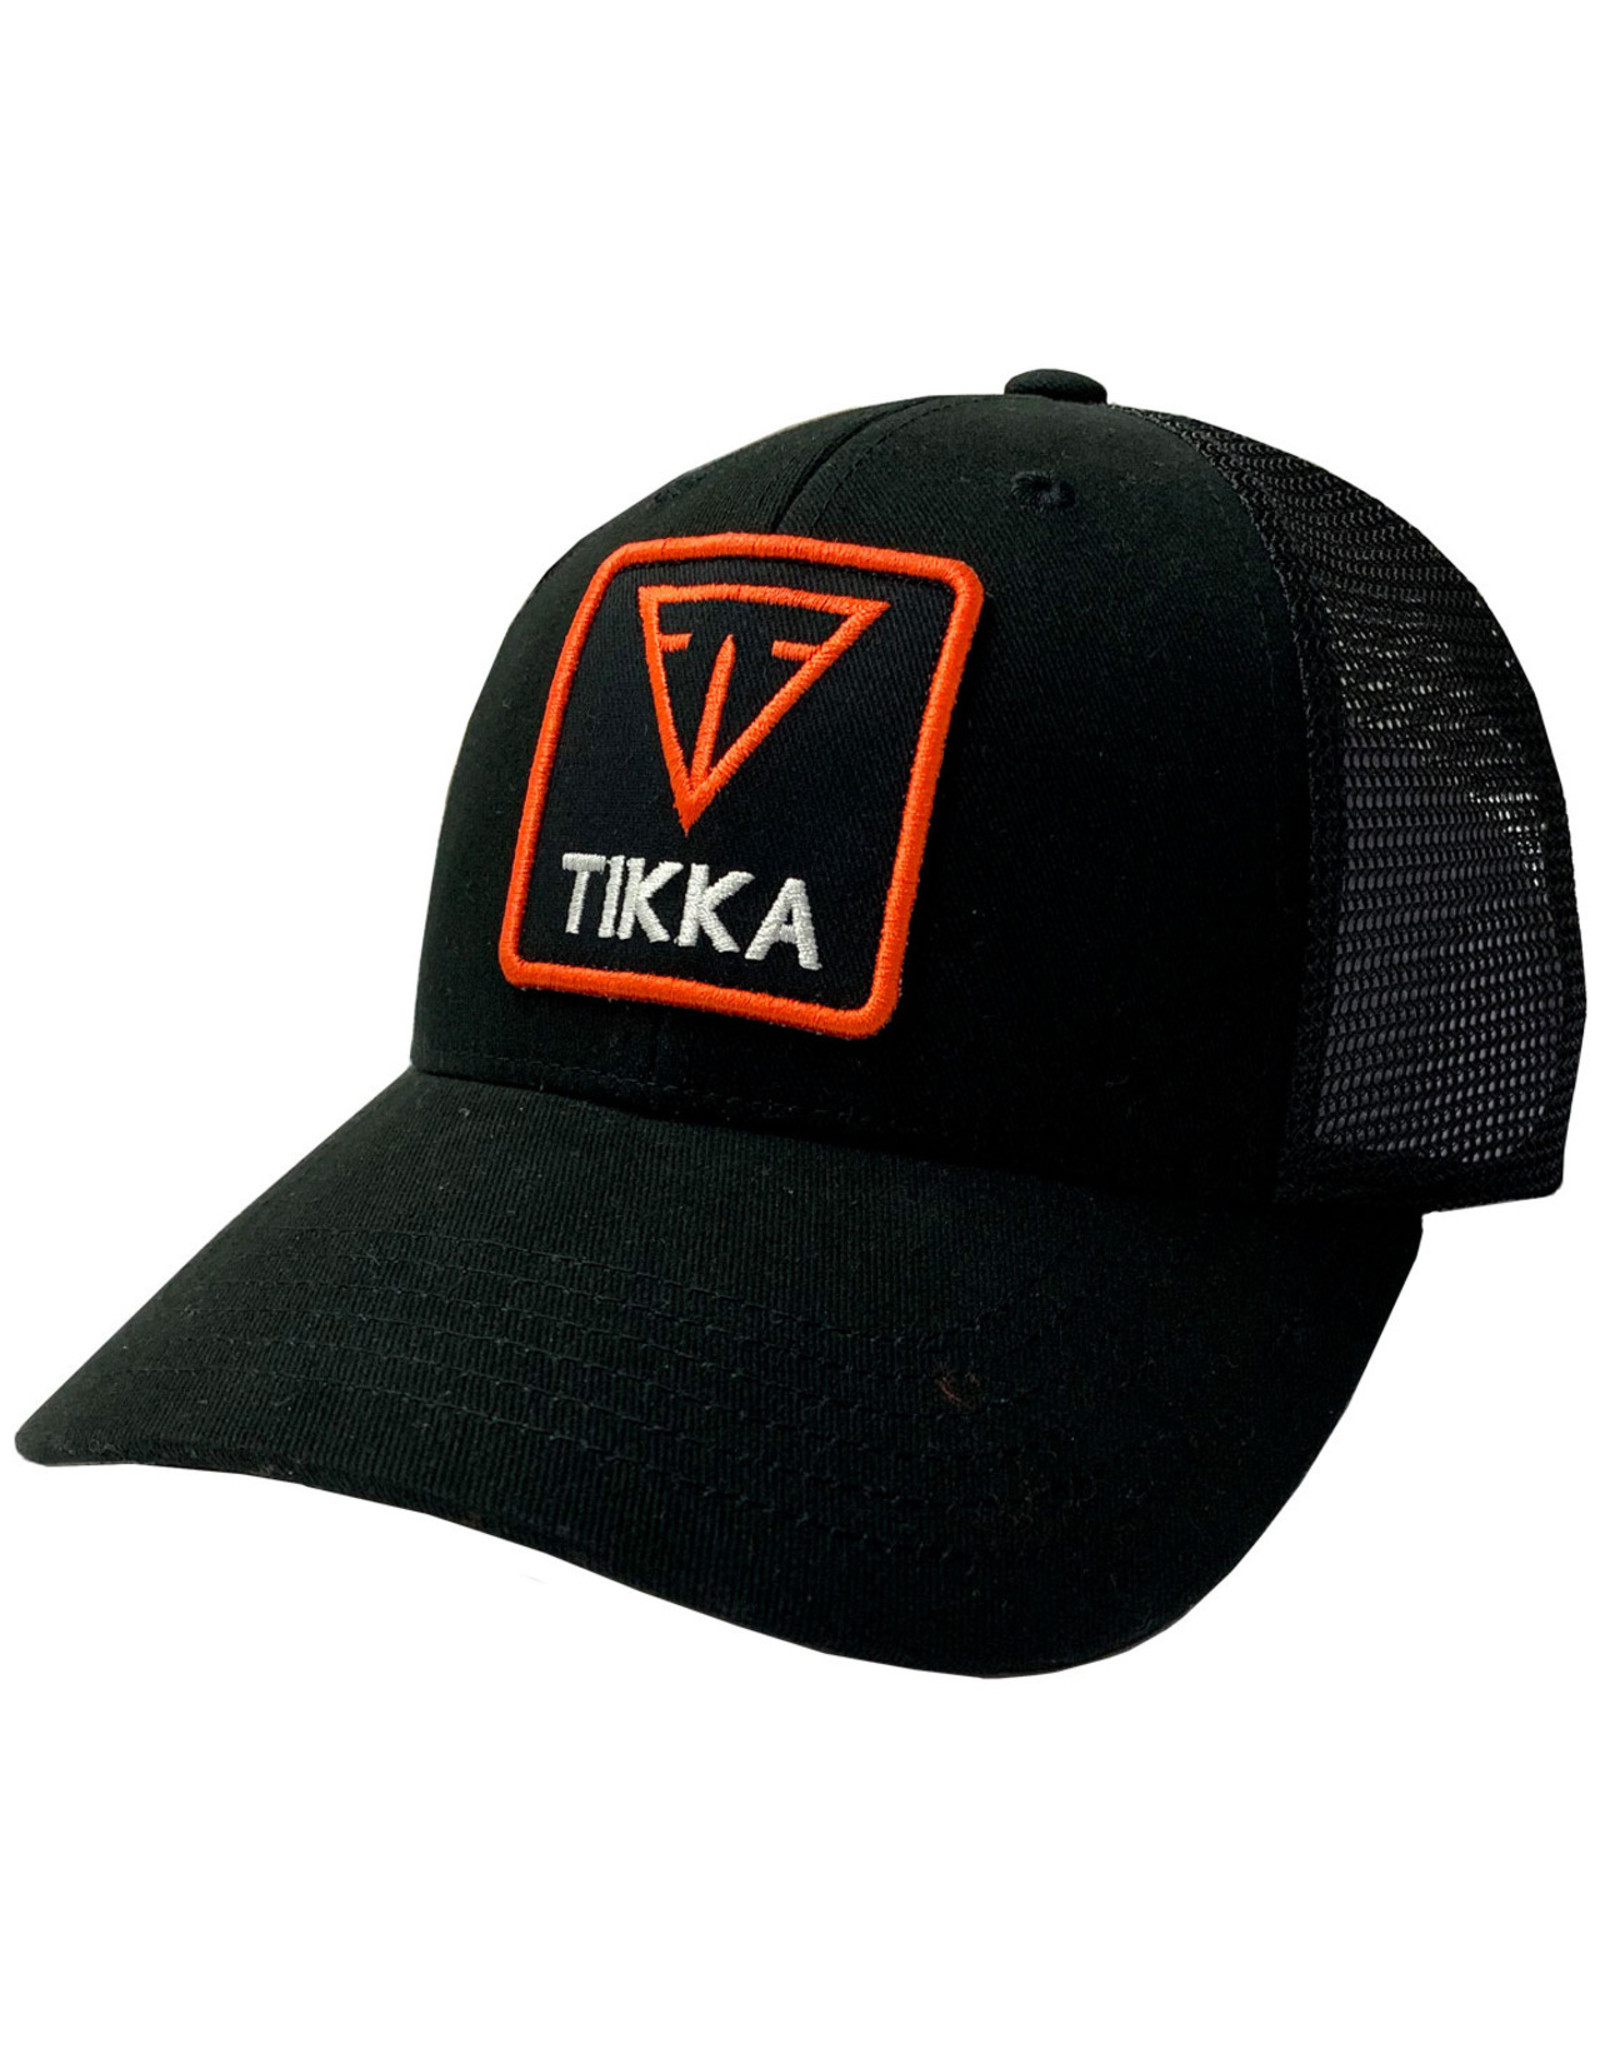 Tikka Tikka Trucker Hat Black with Mesh One Size